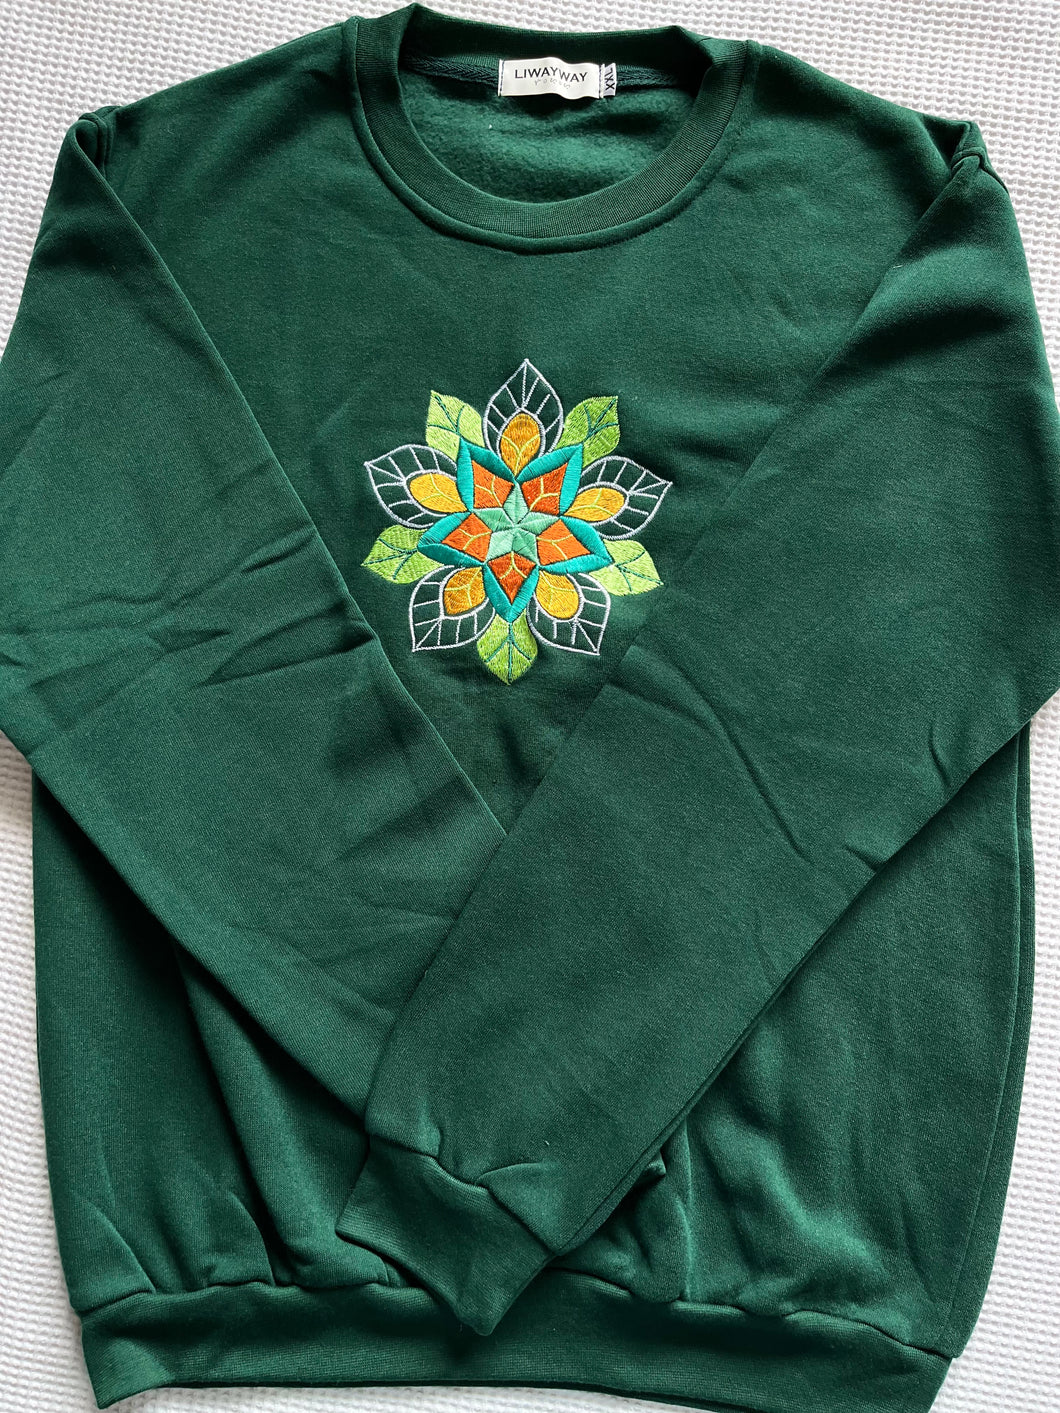 Parol green sweaters 82 size XXL